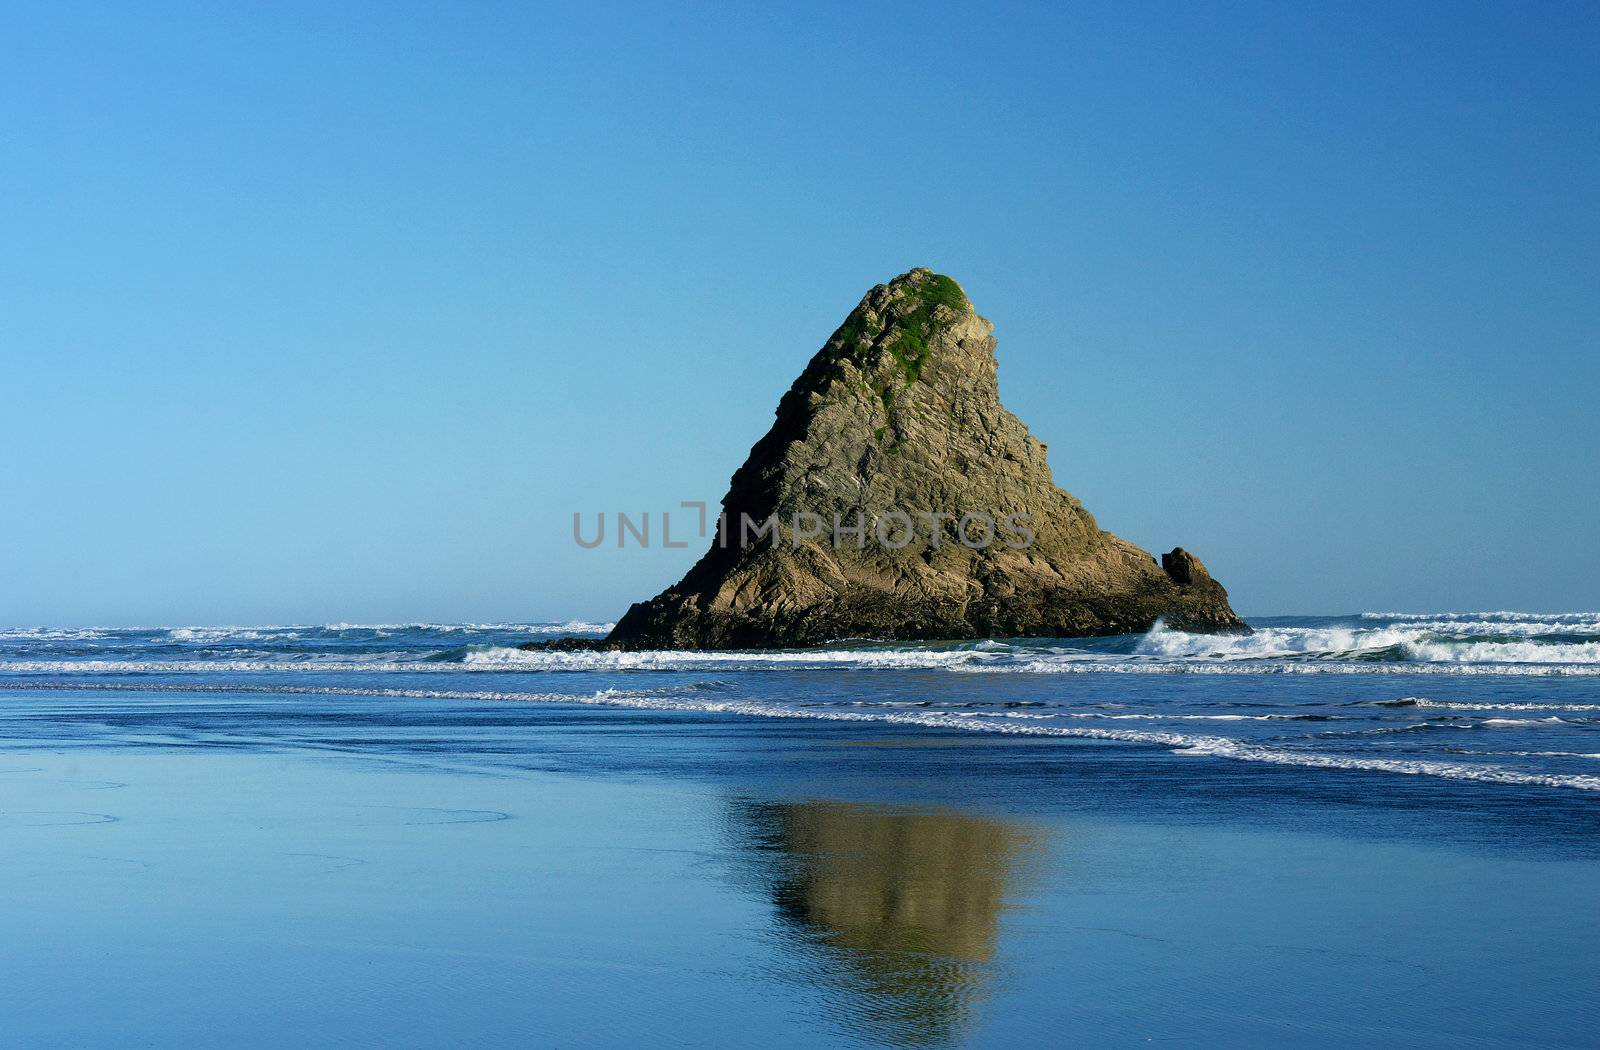 A small rocky outcrop at Karekare, a West Coast Beach near Auckland, New Zealand.

